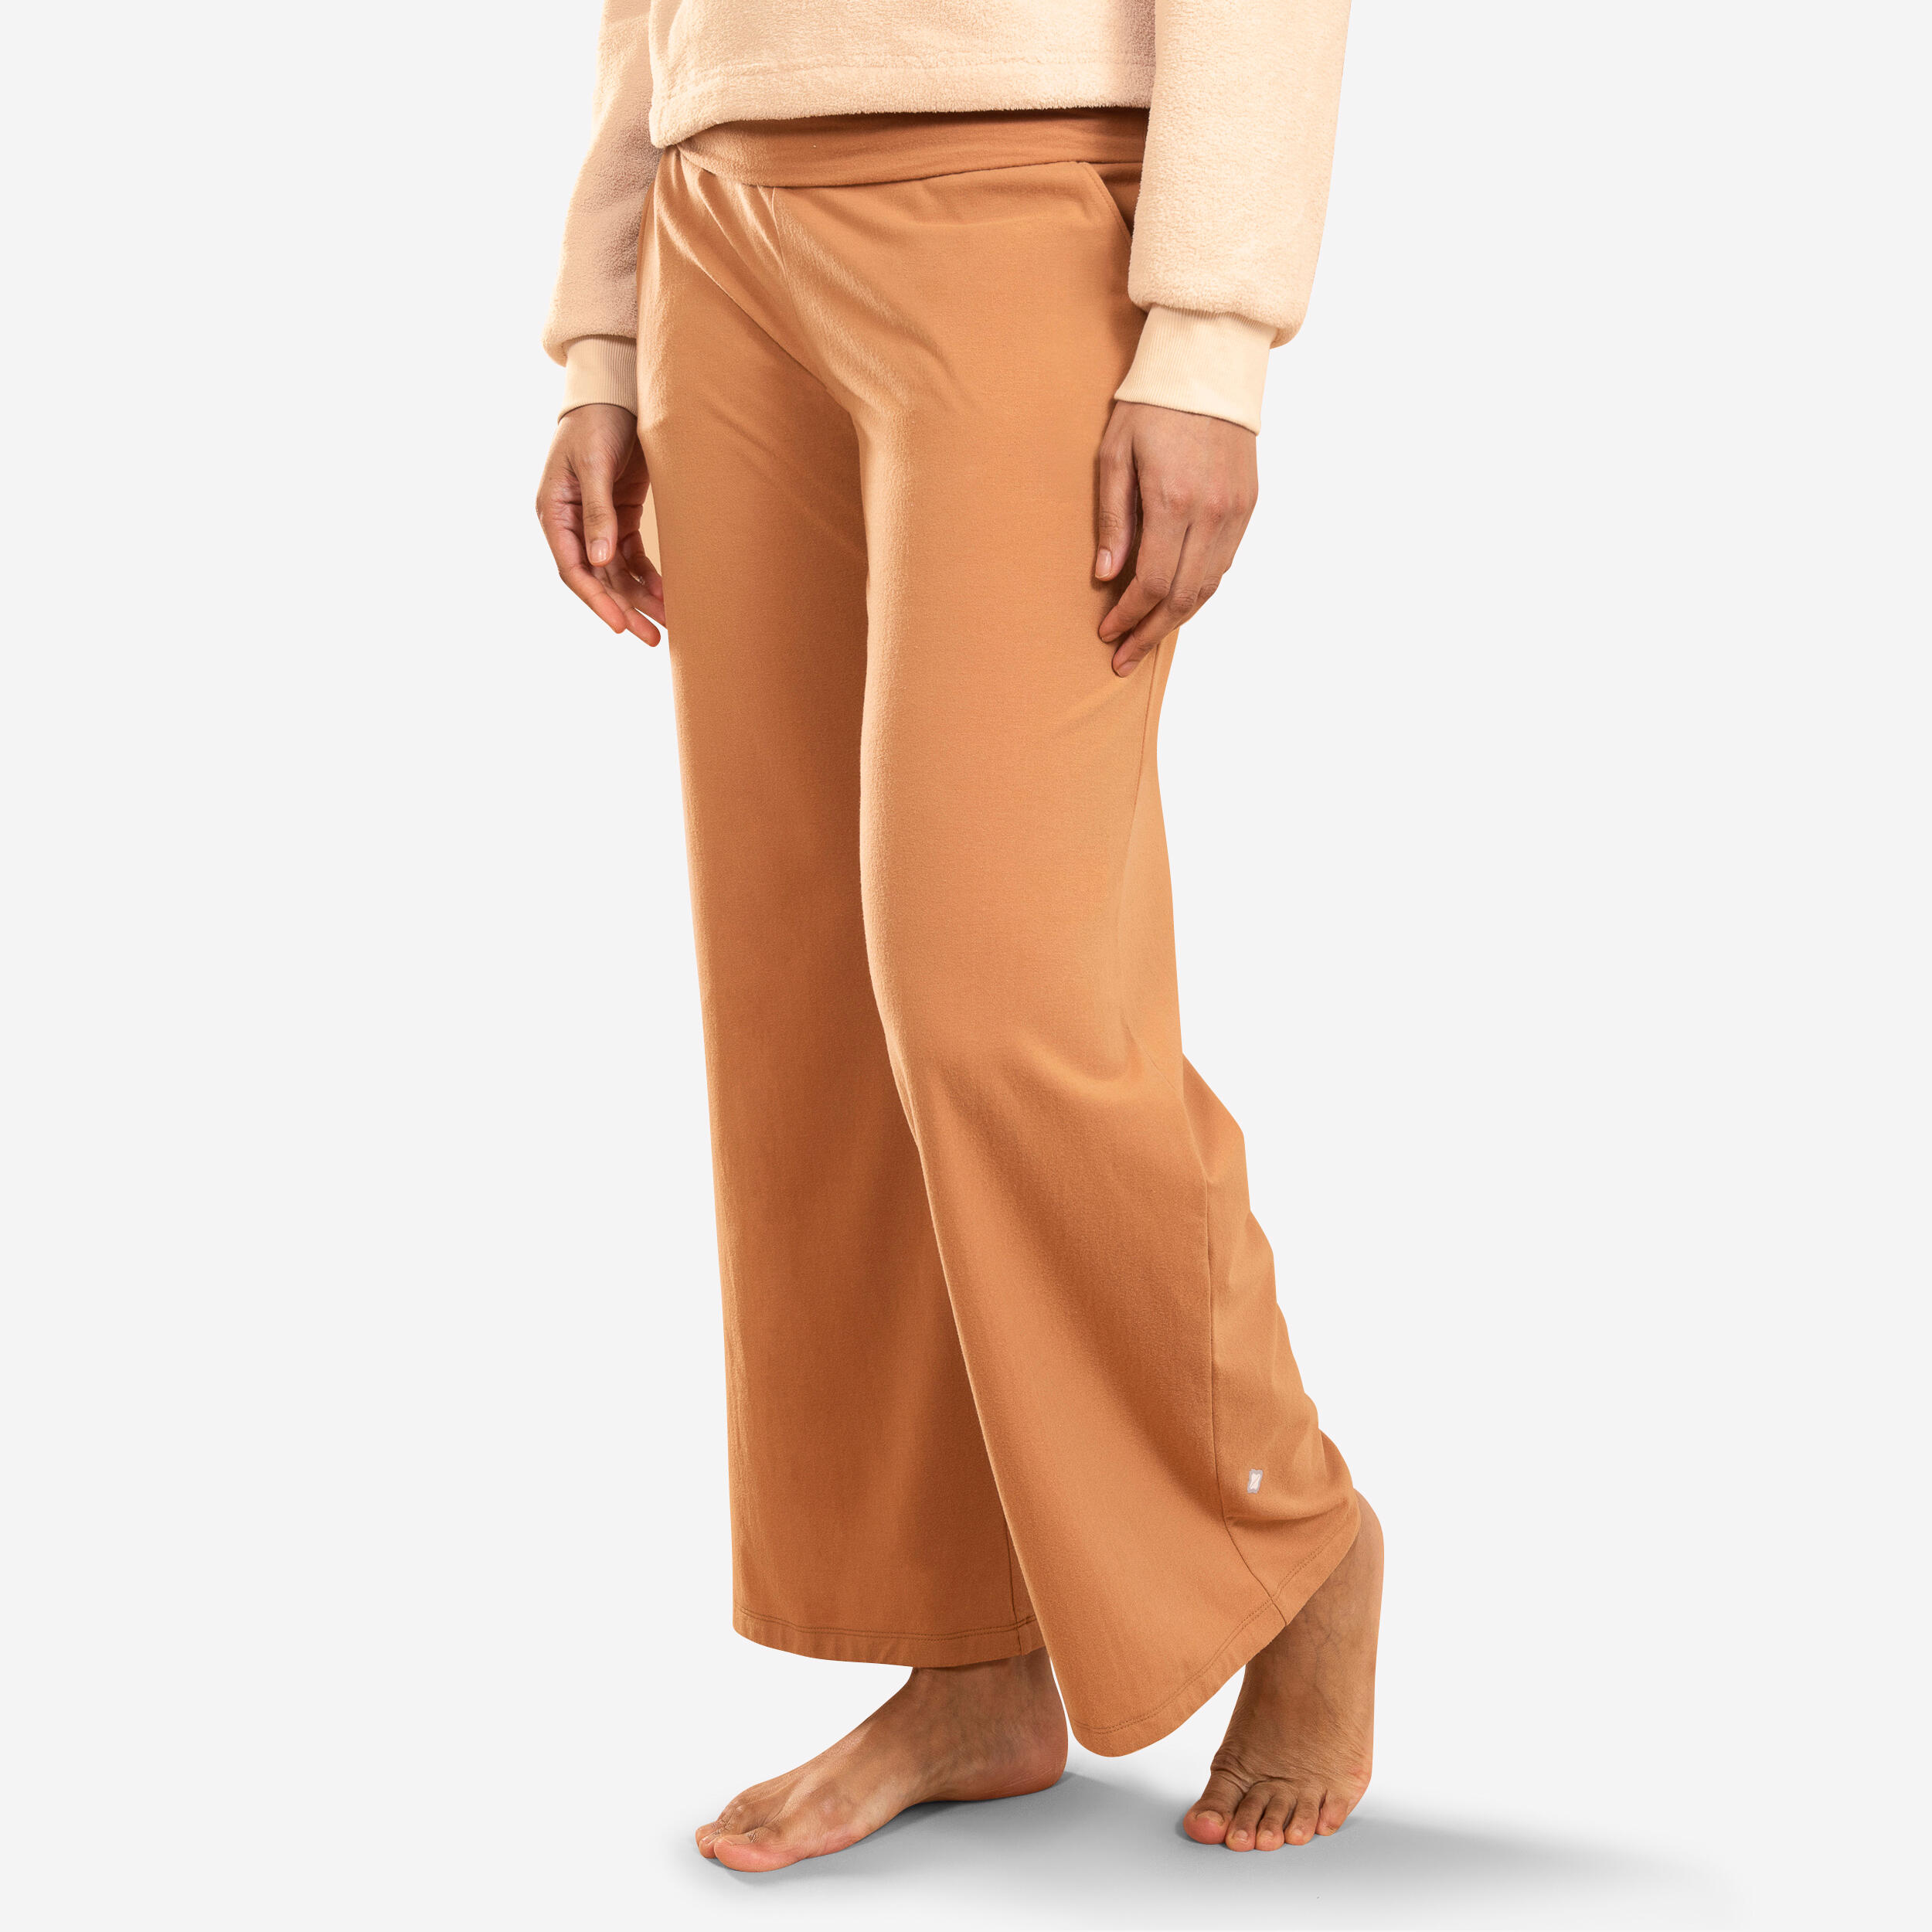 Pantalon de yoga - Femme